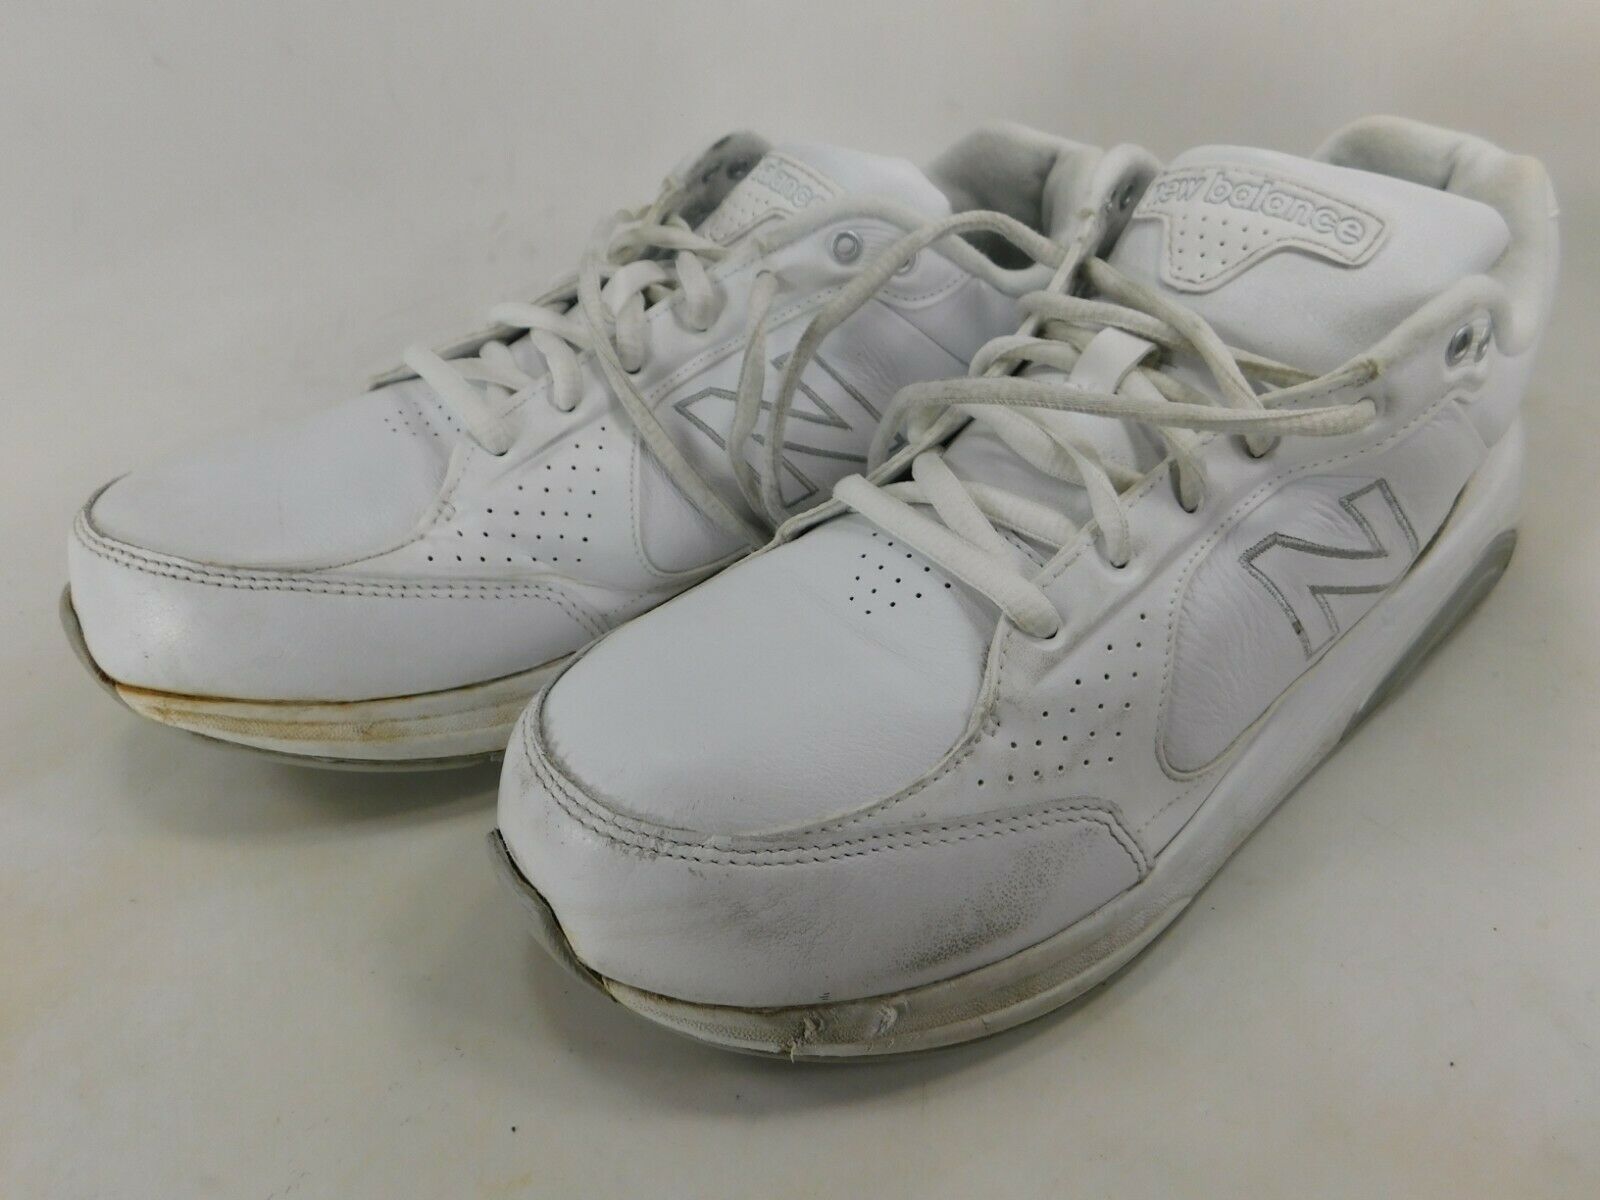 New Balance 928 Size US 10.5 M (B) EU 42.5 Women's Walking Shoes White ...